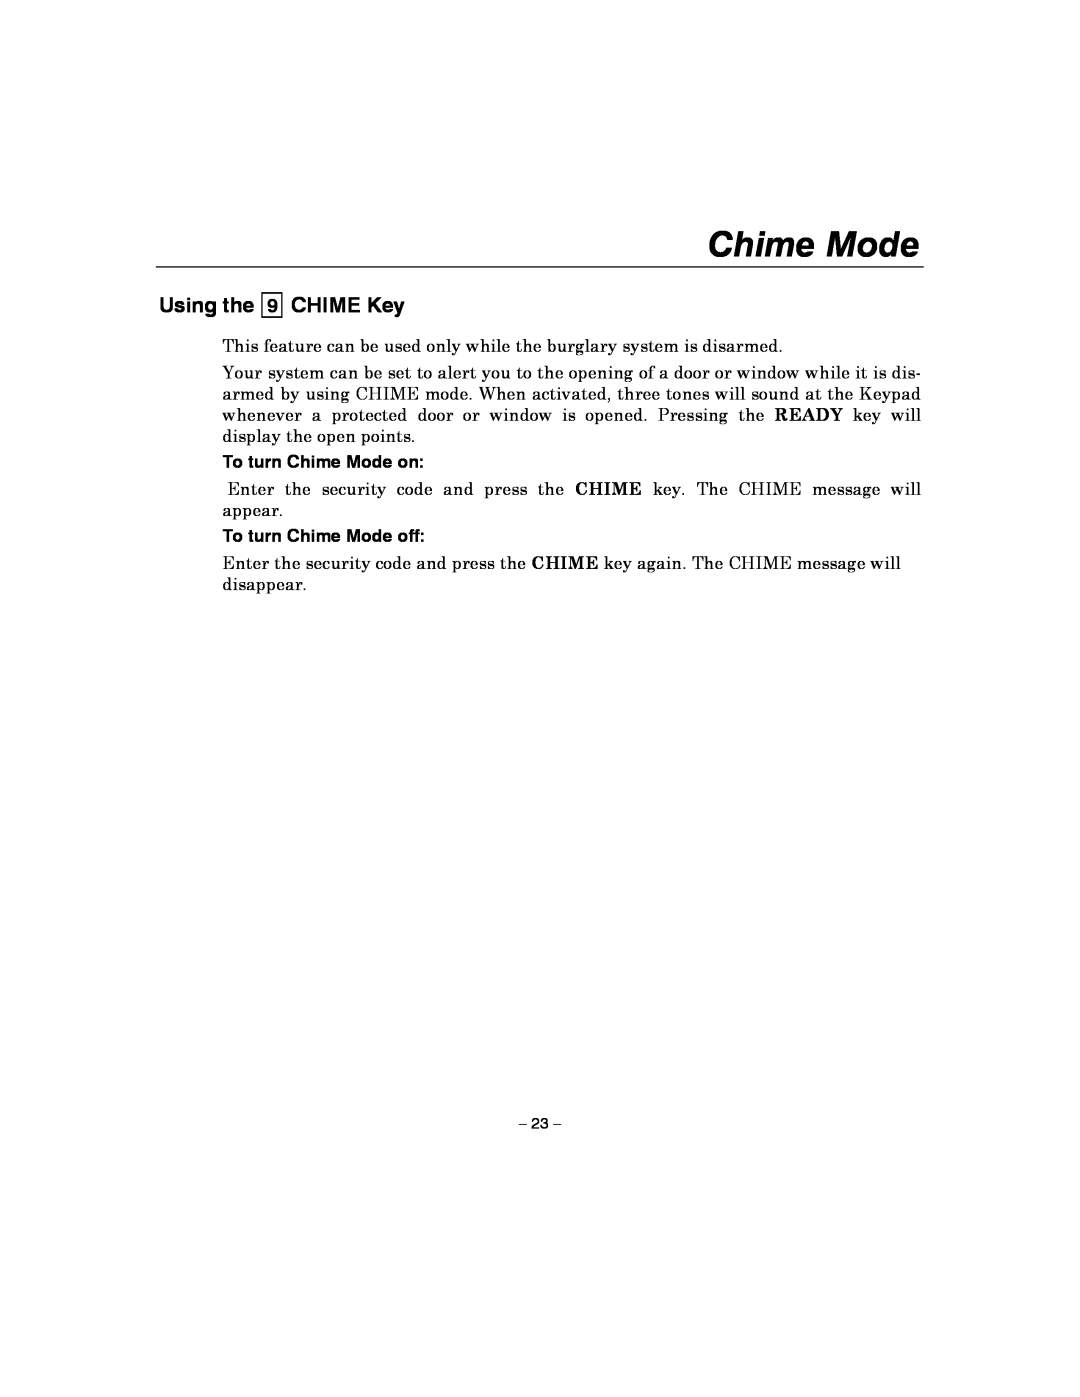 Honeywell 4110XM manual Chime Mode, CHIME Key, Using the 